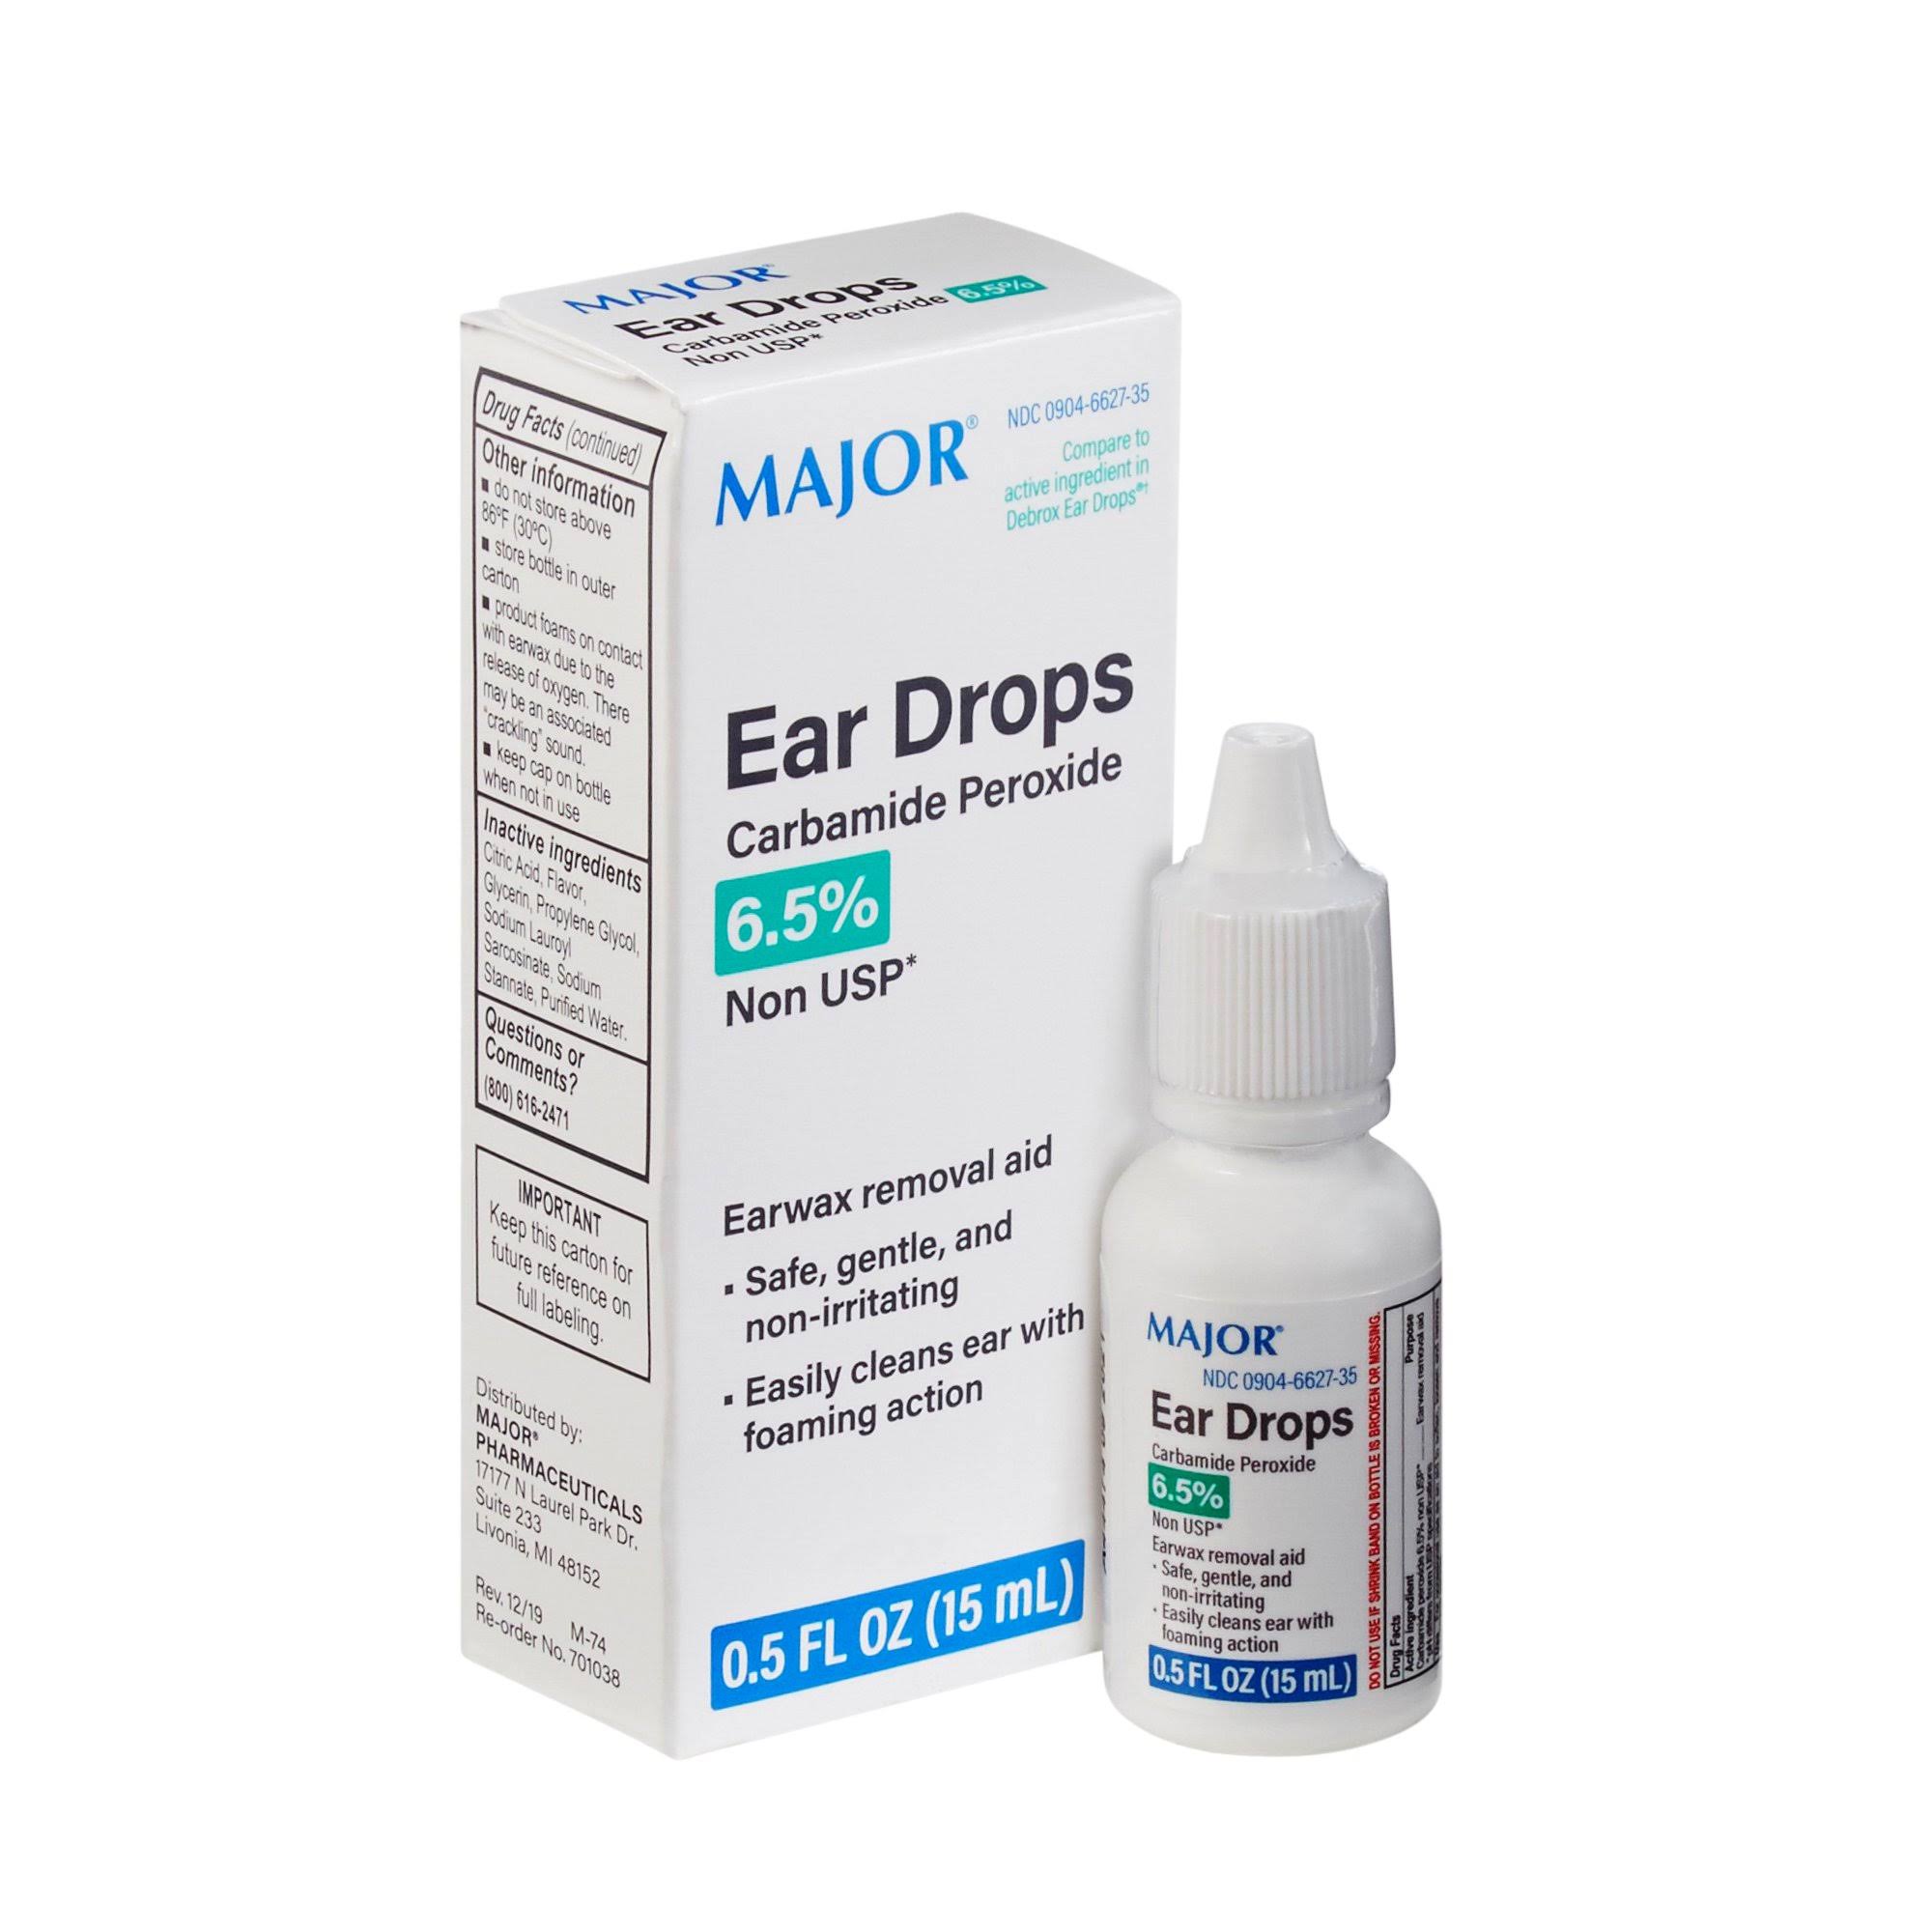 Major Ear Drops Earwax Removal Aid 0.5oz 15ml Carbamide Peroxide 6.5%